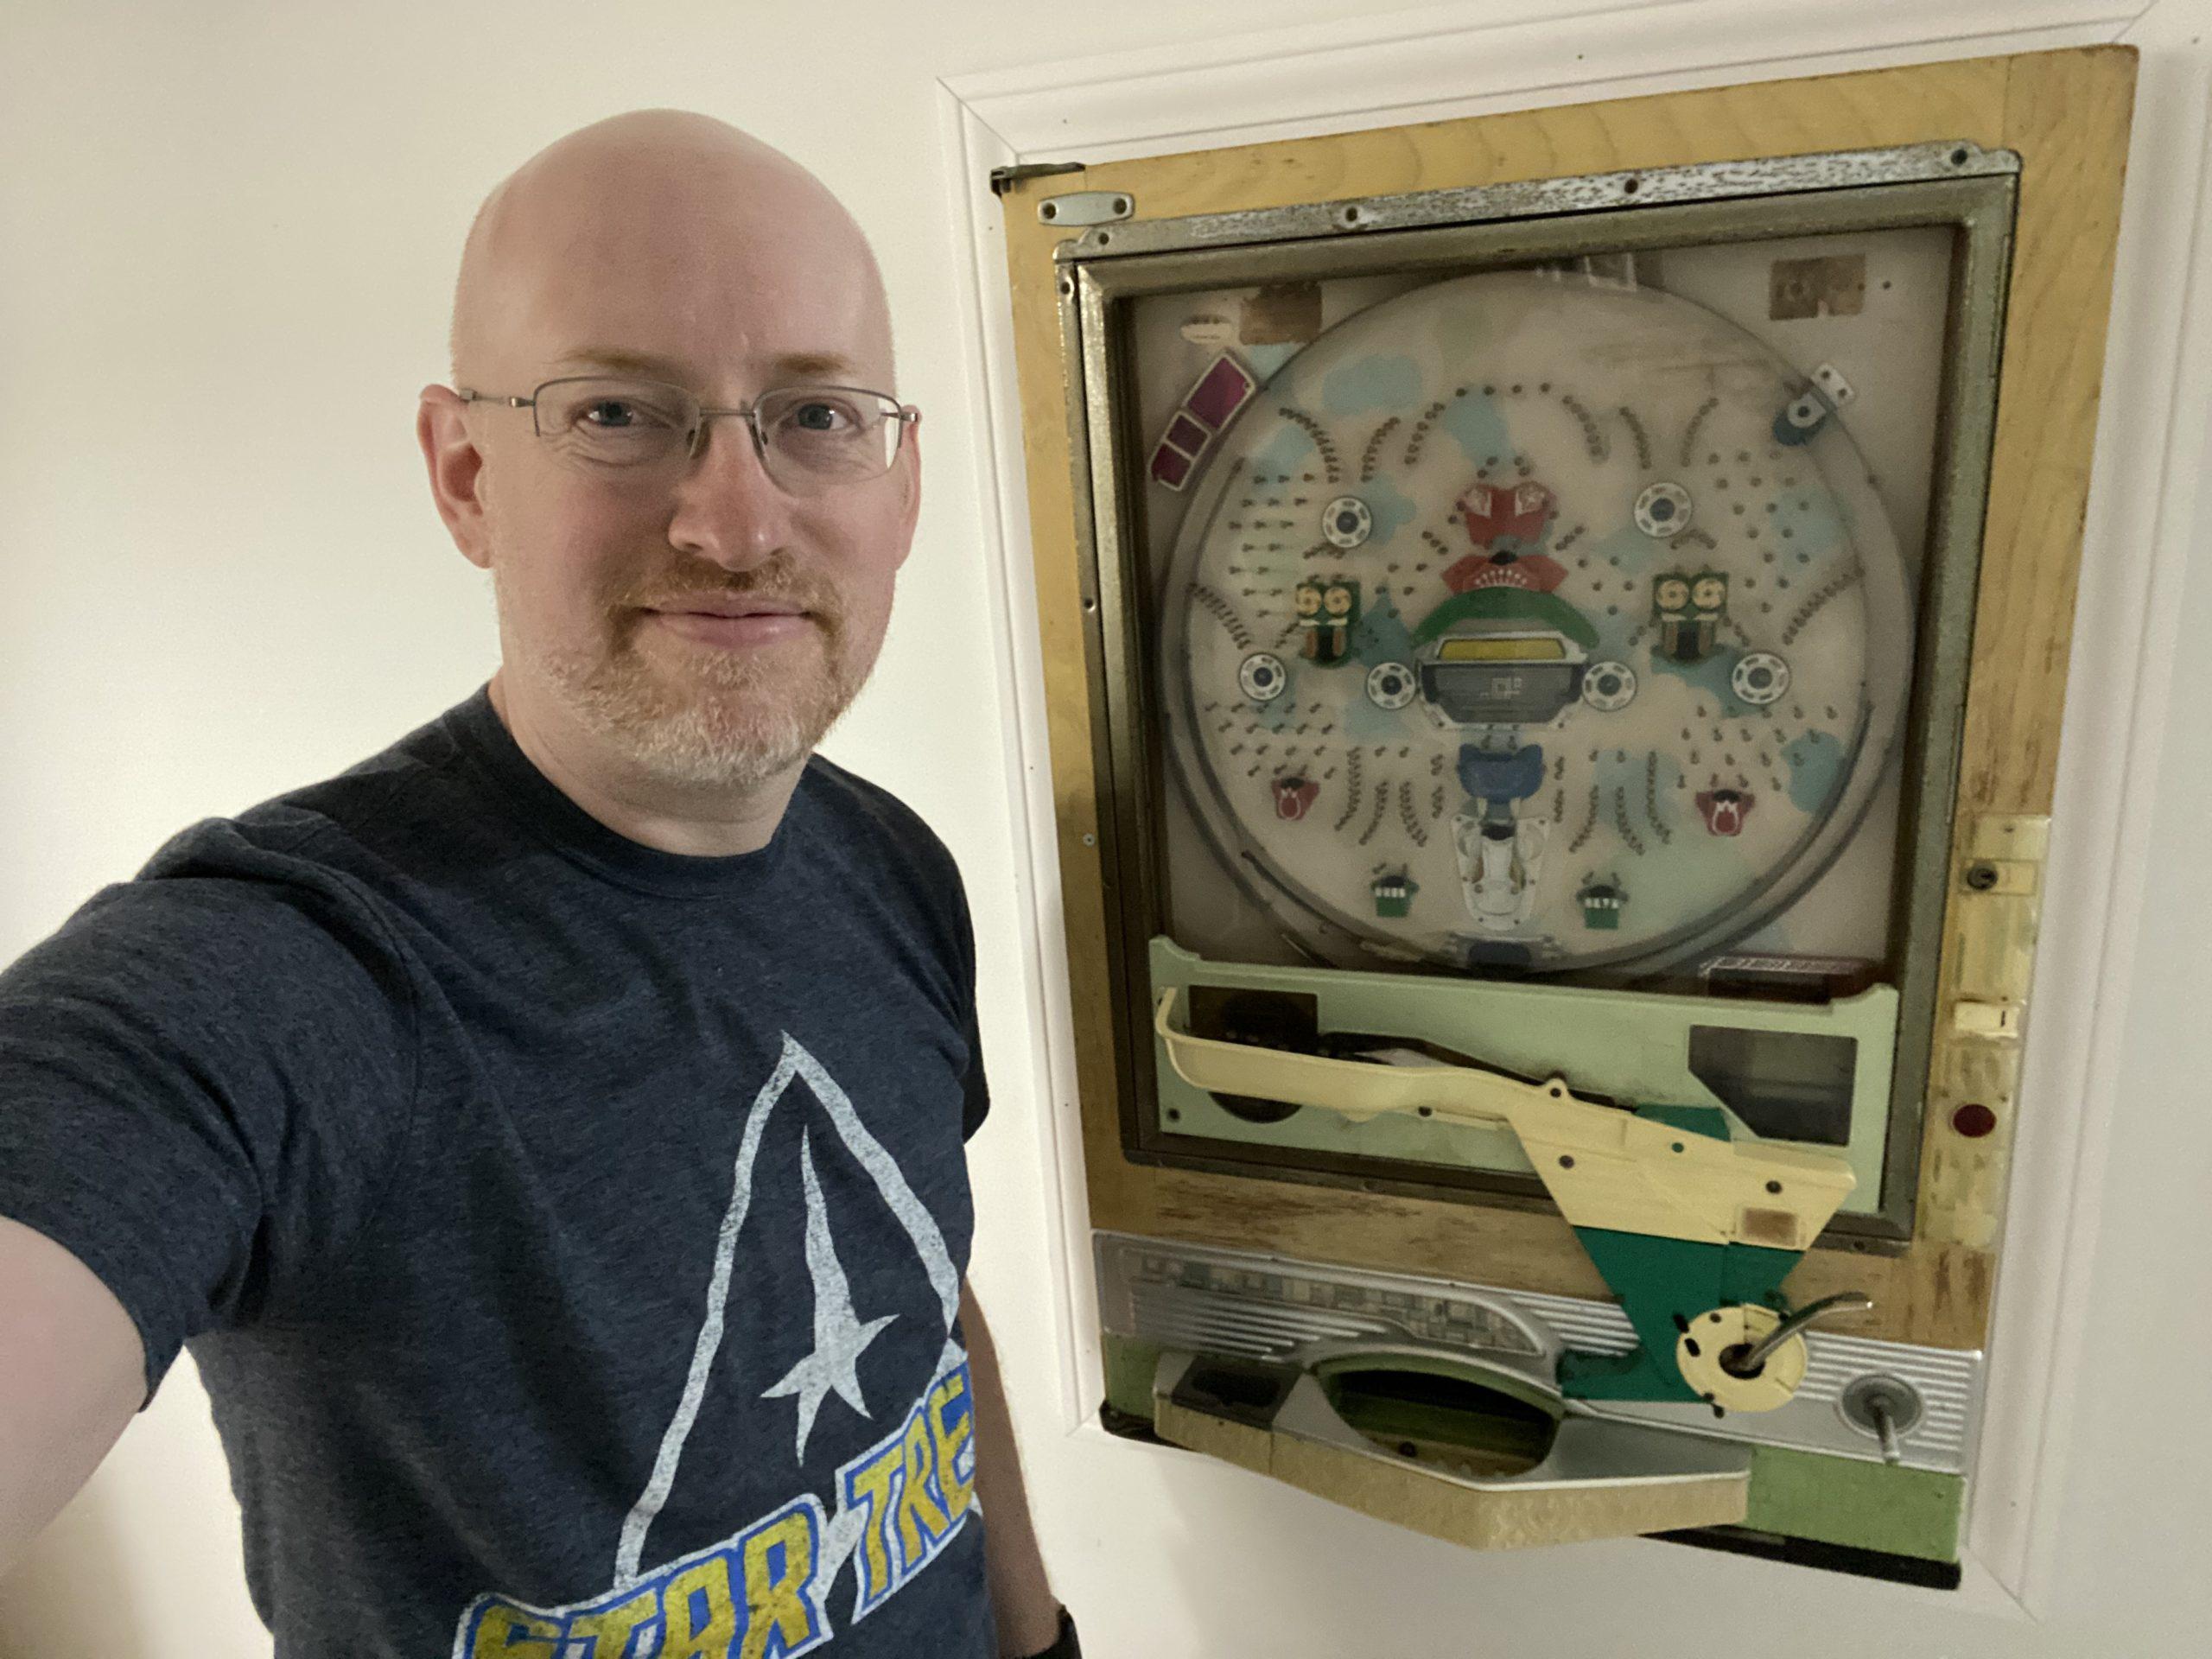 Me standing next to a vintage pachinko machine set into a wall.